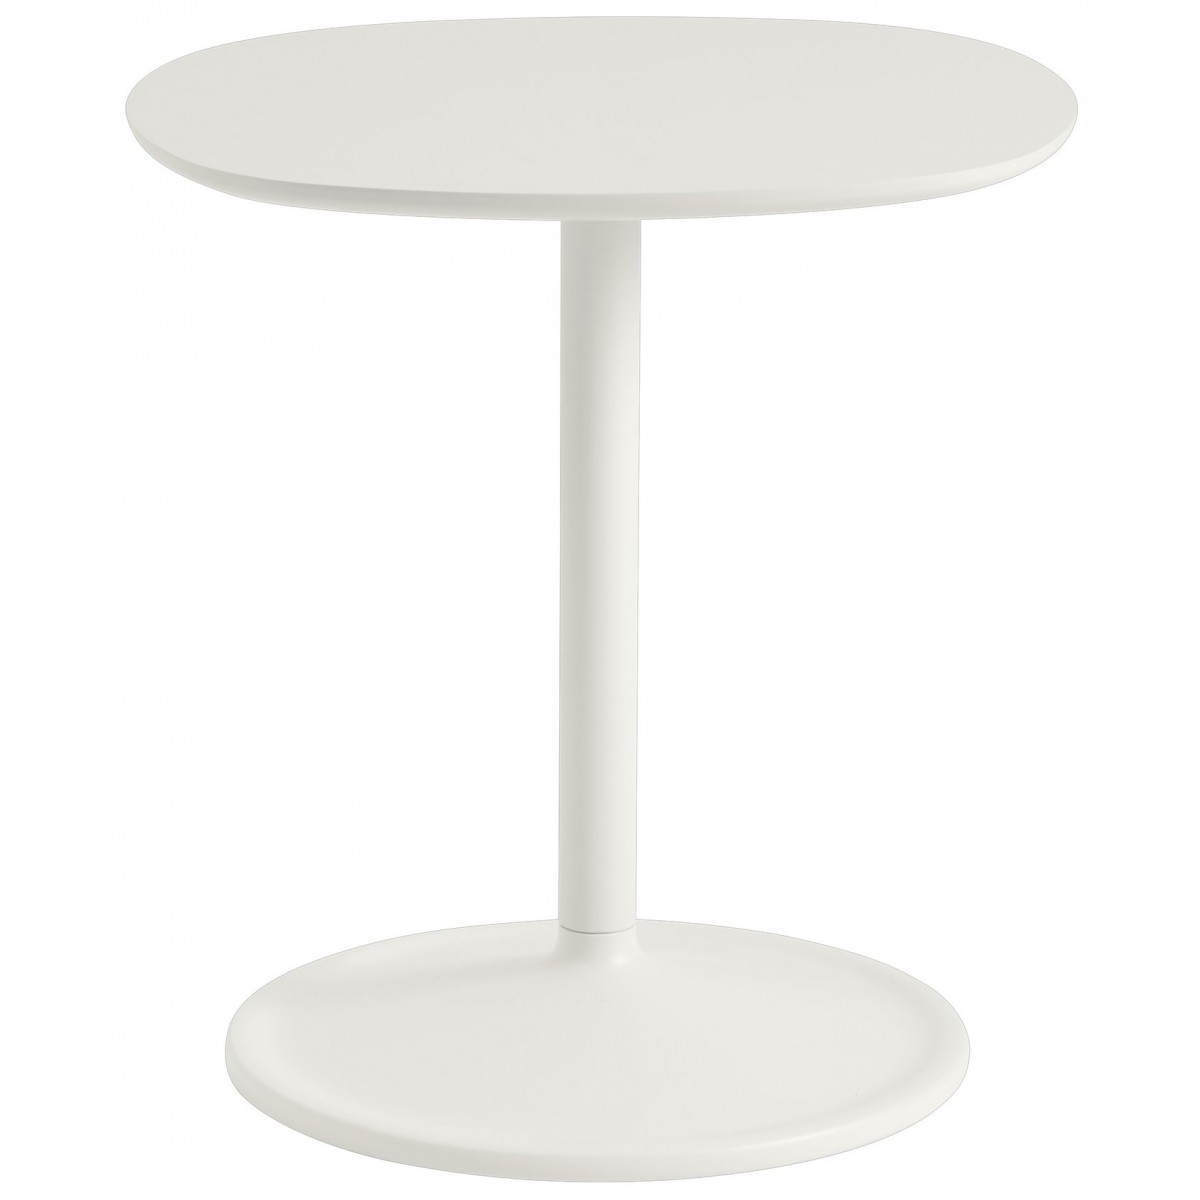 Off white - 45x45cm, H48cm - Soft side table